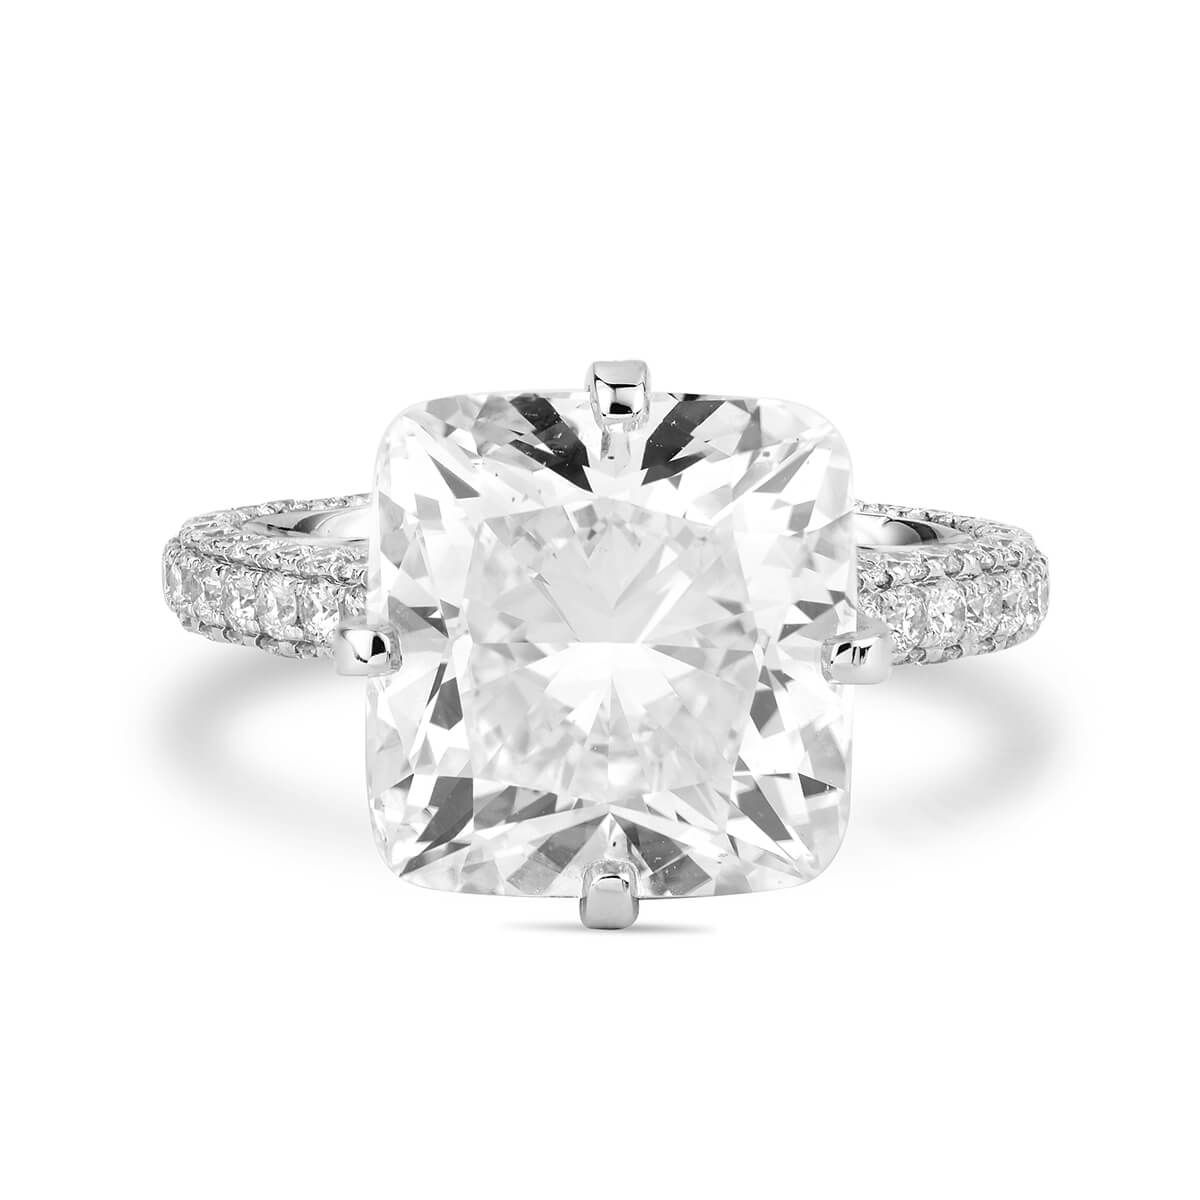  White Diamond Ring, 8.71 Ct. TW, Cushion shape, GIA Certified, 2183142510